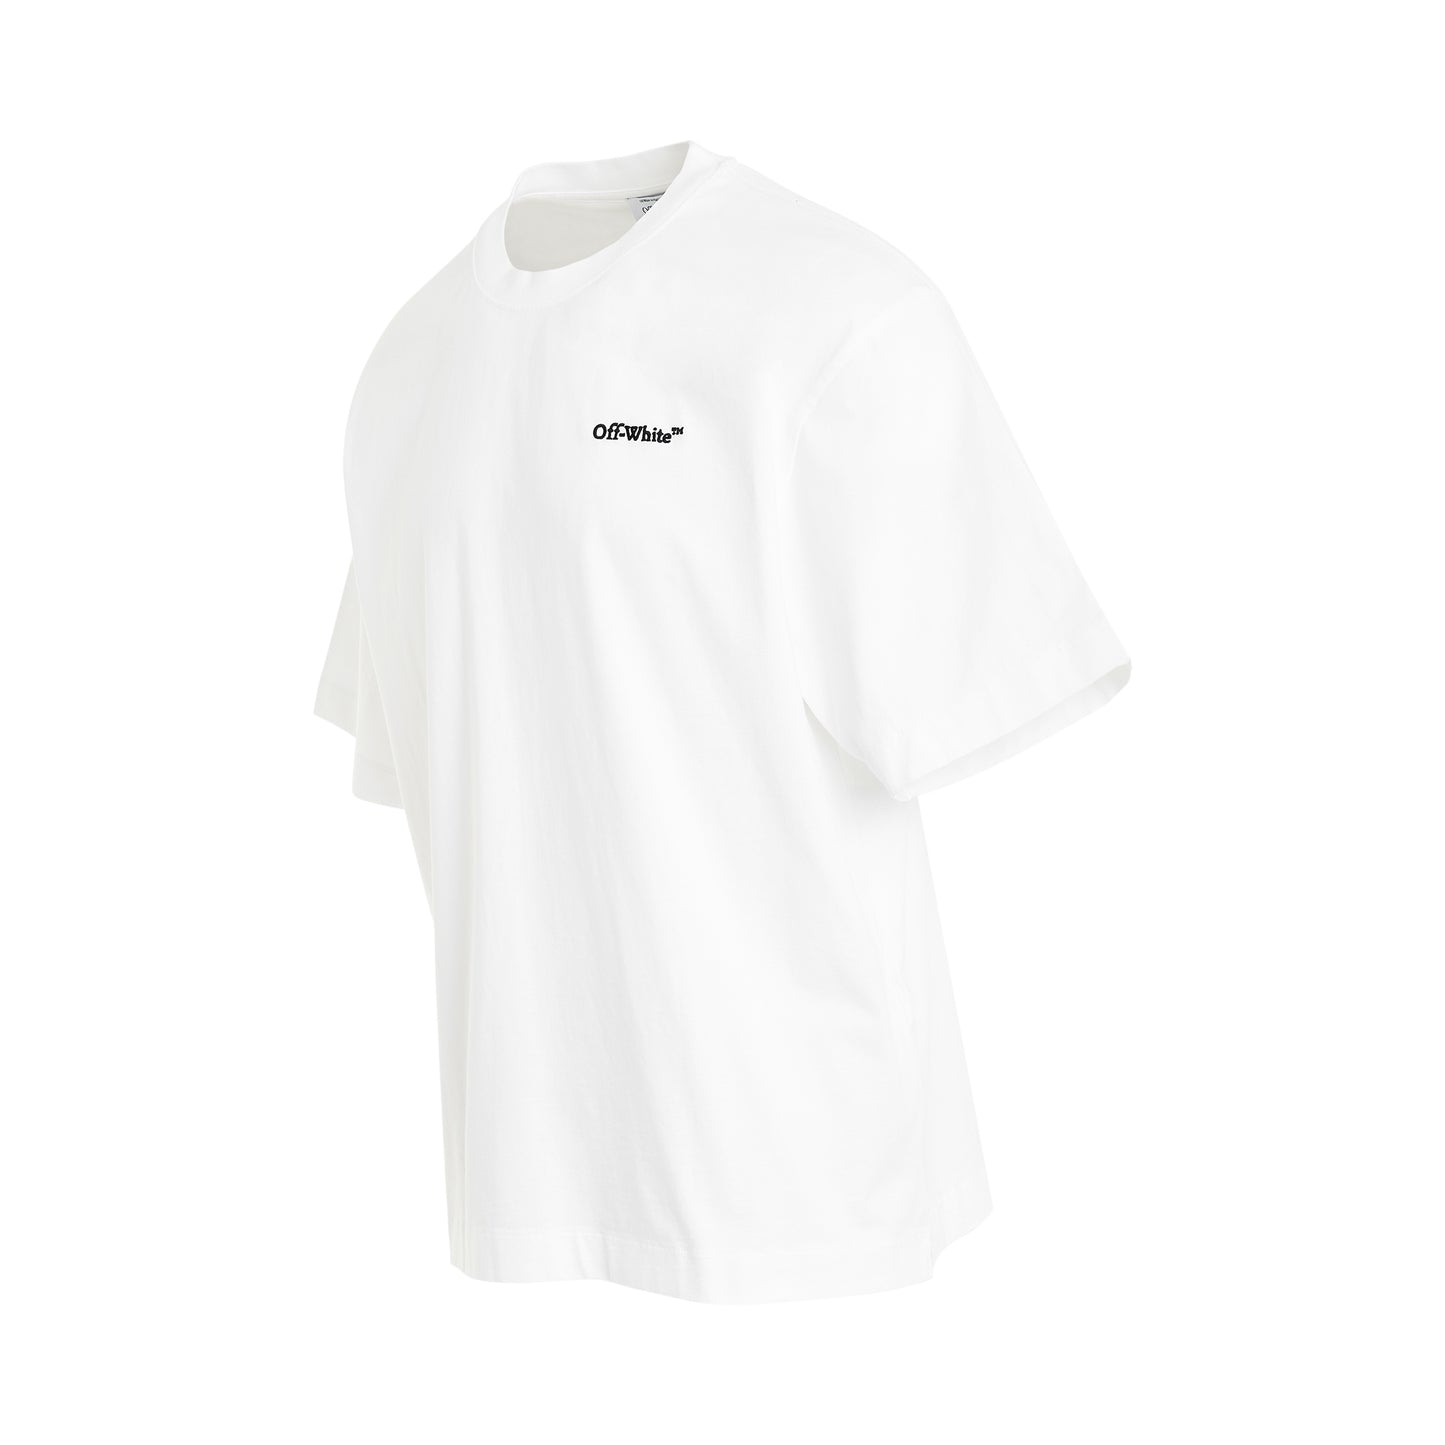 Tattoo Arrow Skate T-Shirt in White/Black